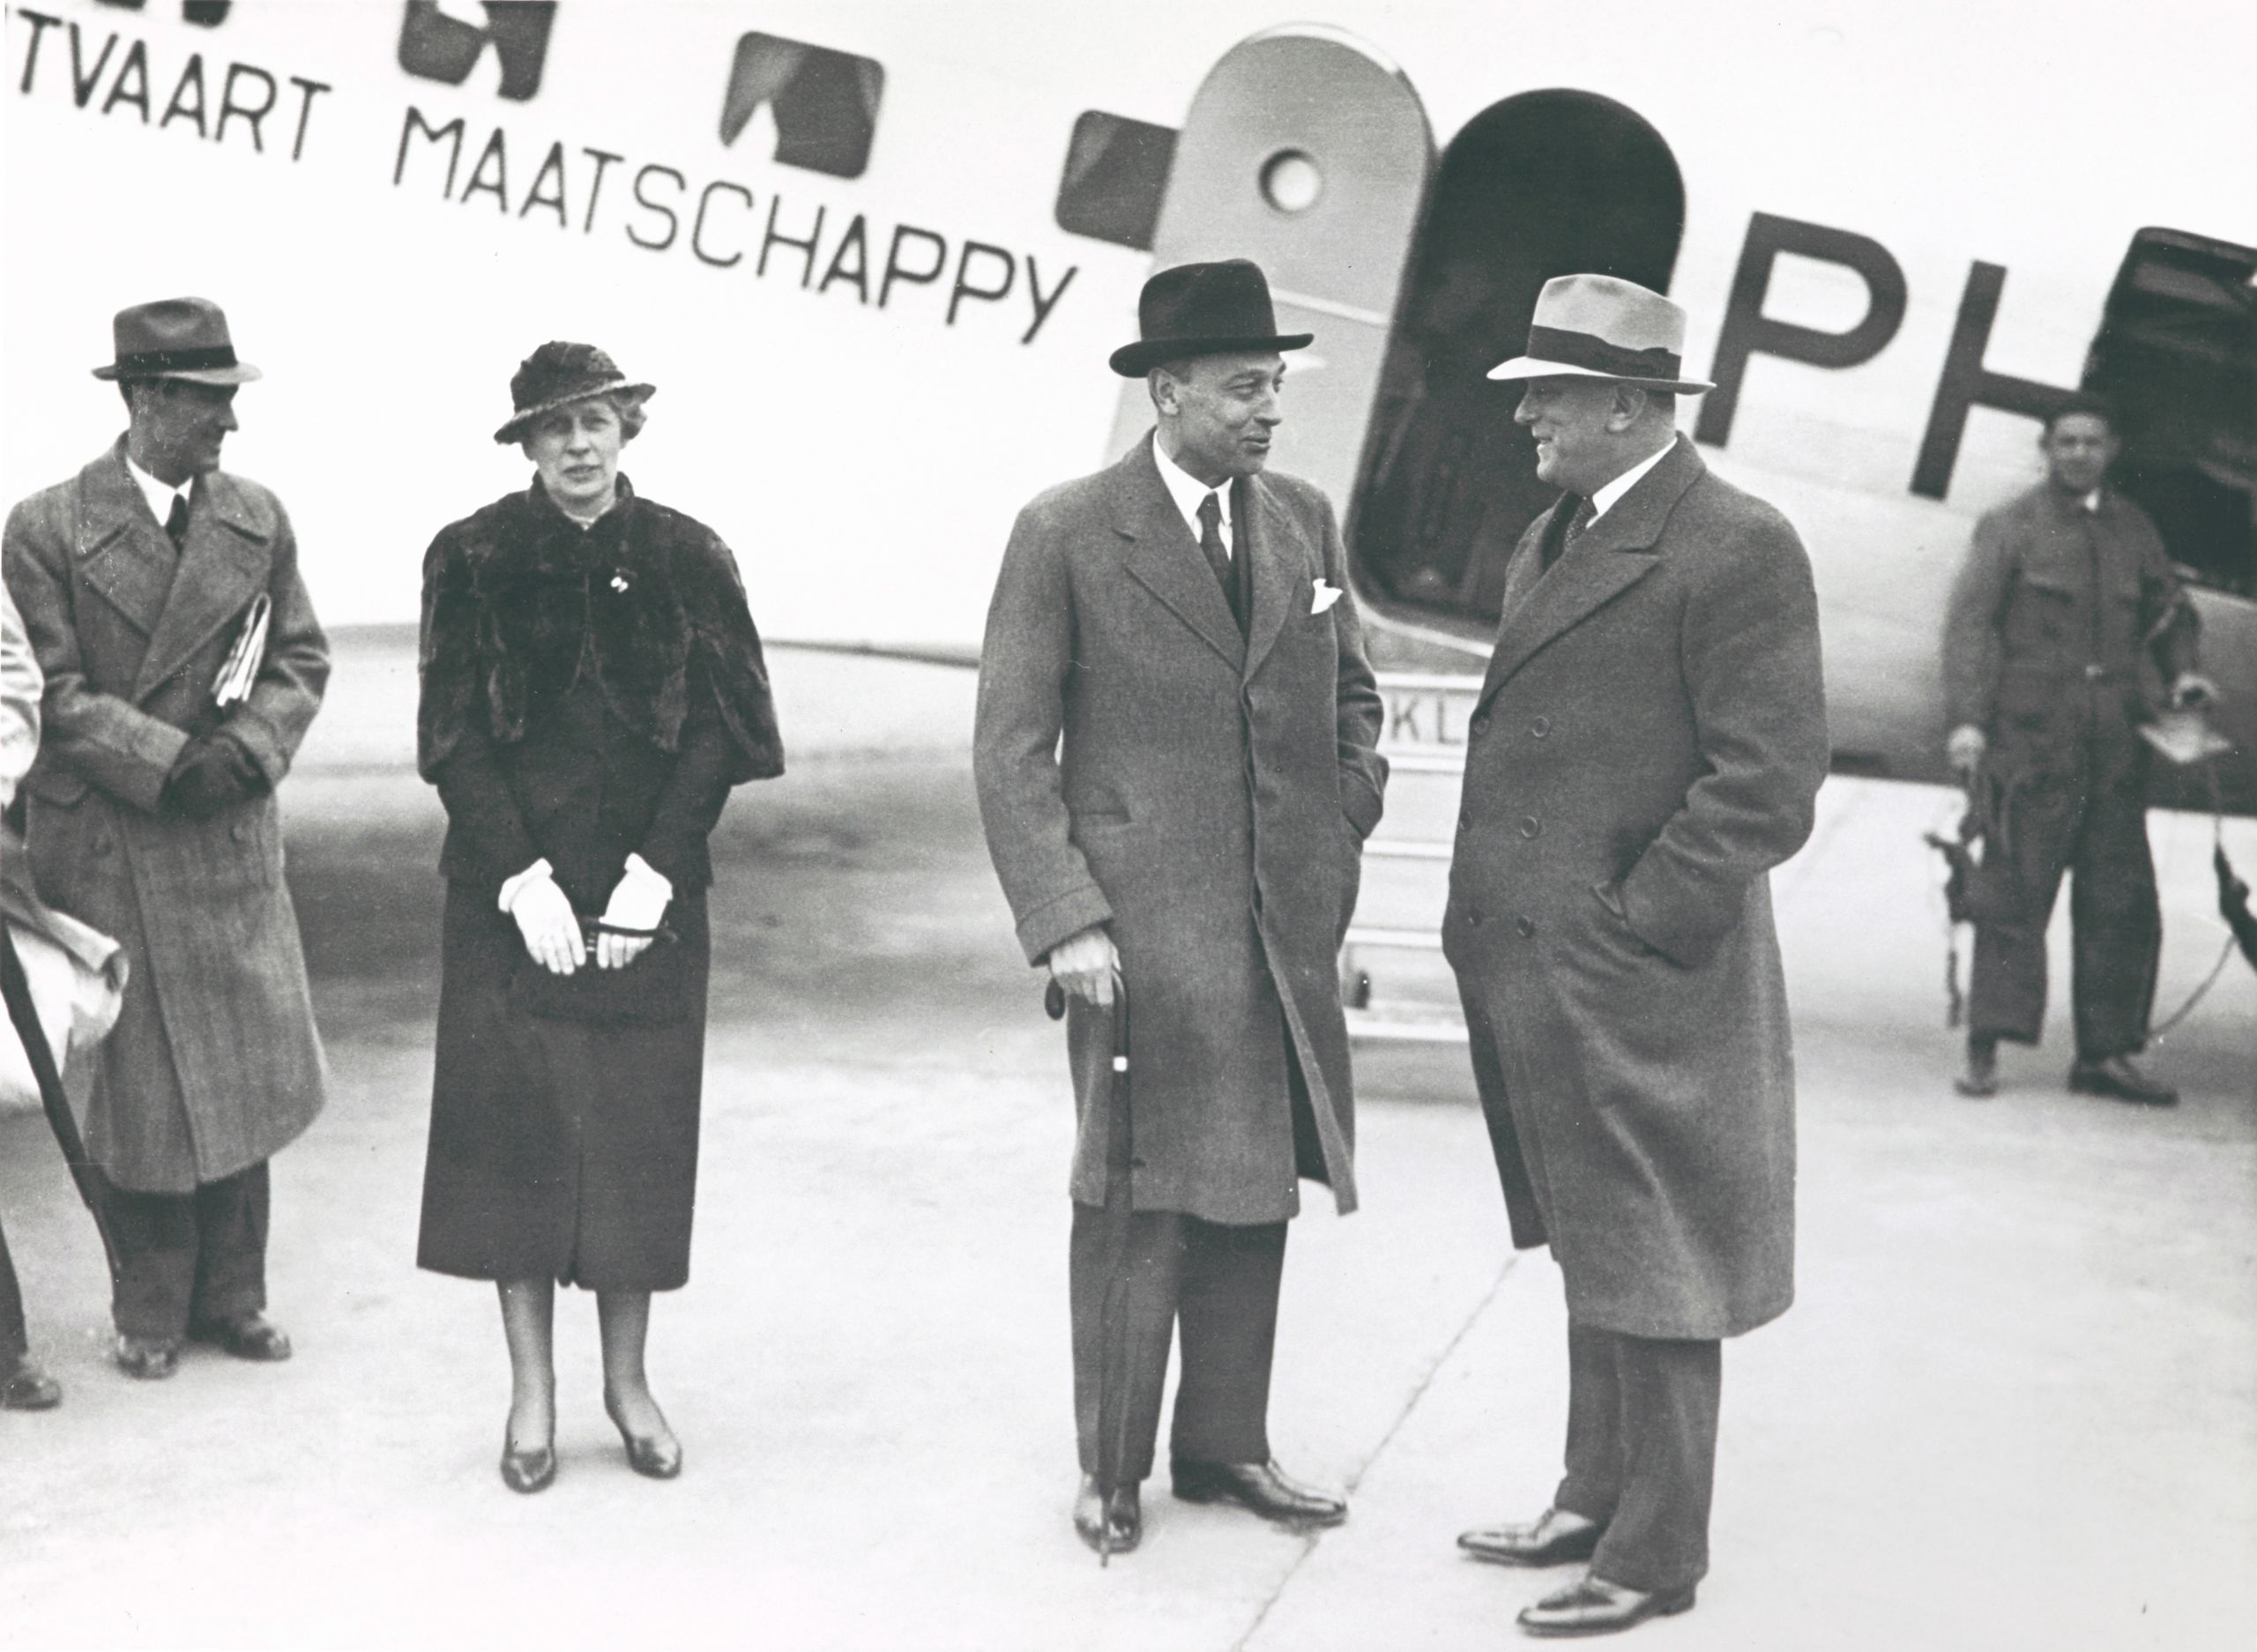 SHV director Frits Fentener-van Vlissingen (left) and aviation pioneer Albert Plesman (right) in front of a KLM airplane in 1937.